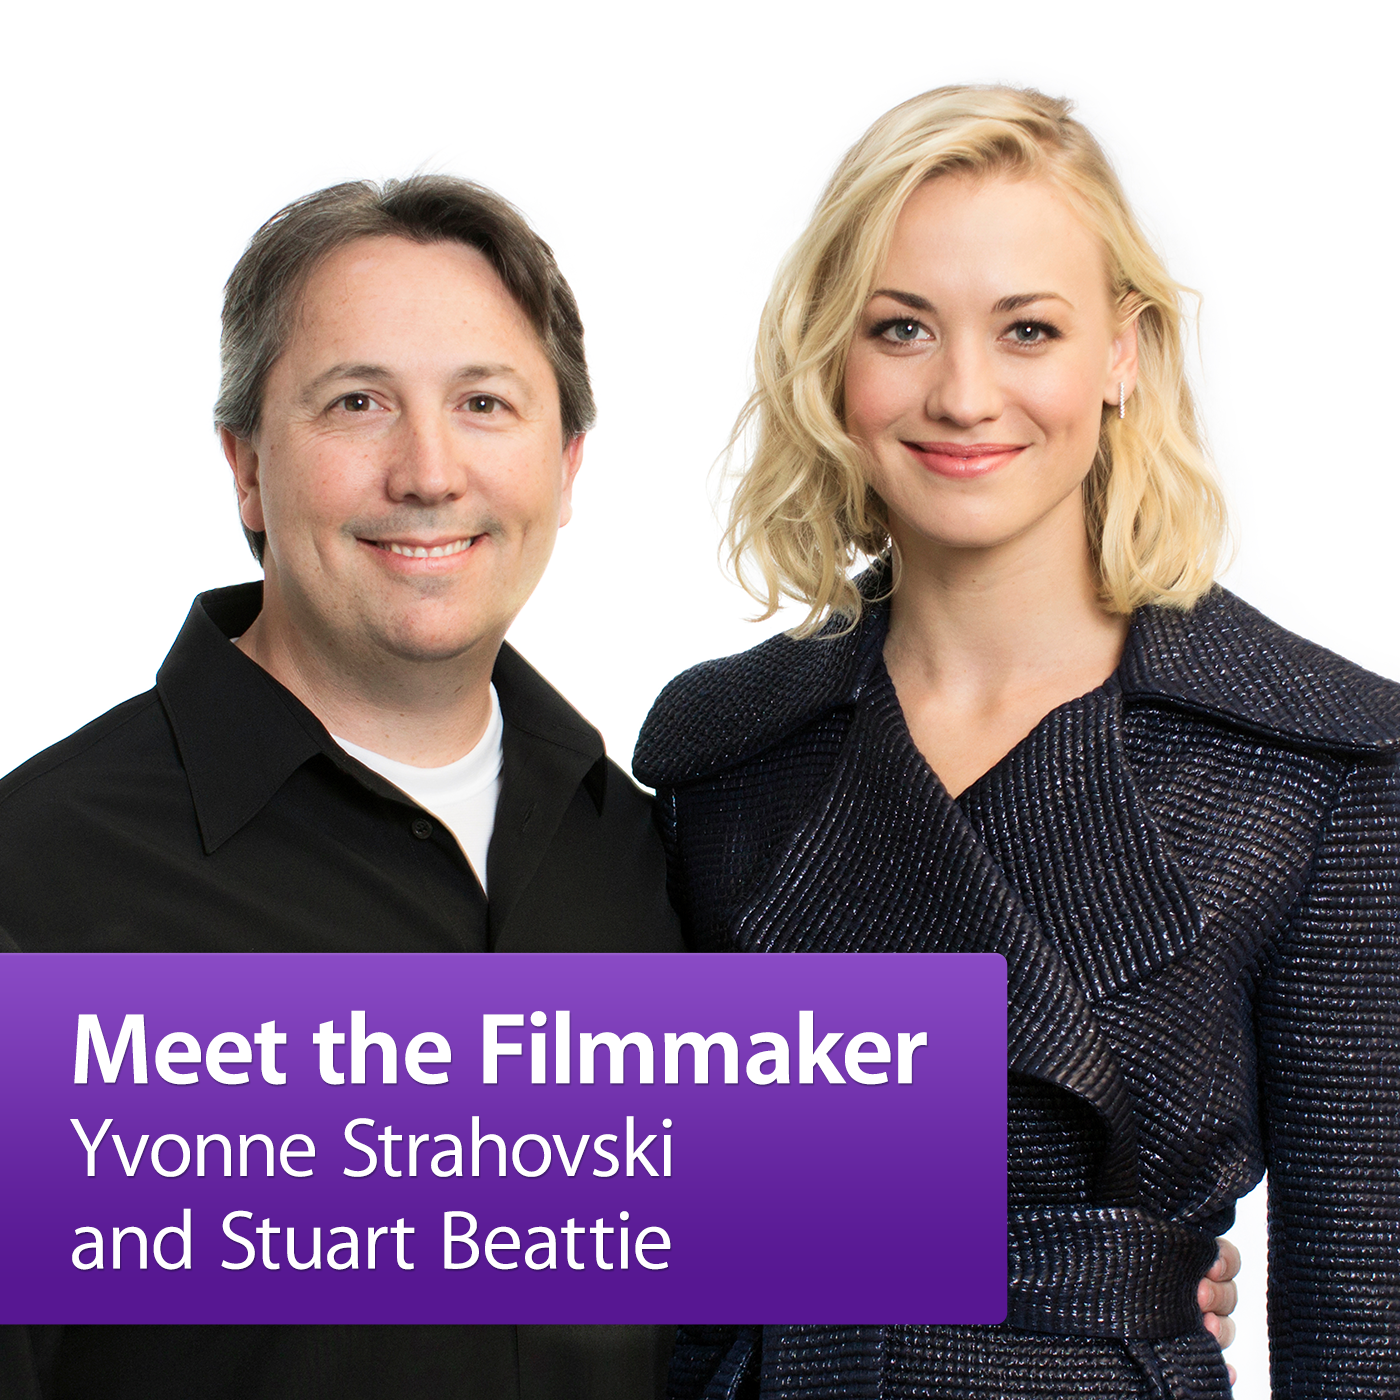 Yvonne Strahovski and Stuart Beattie: Meet the Filmmaker